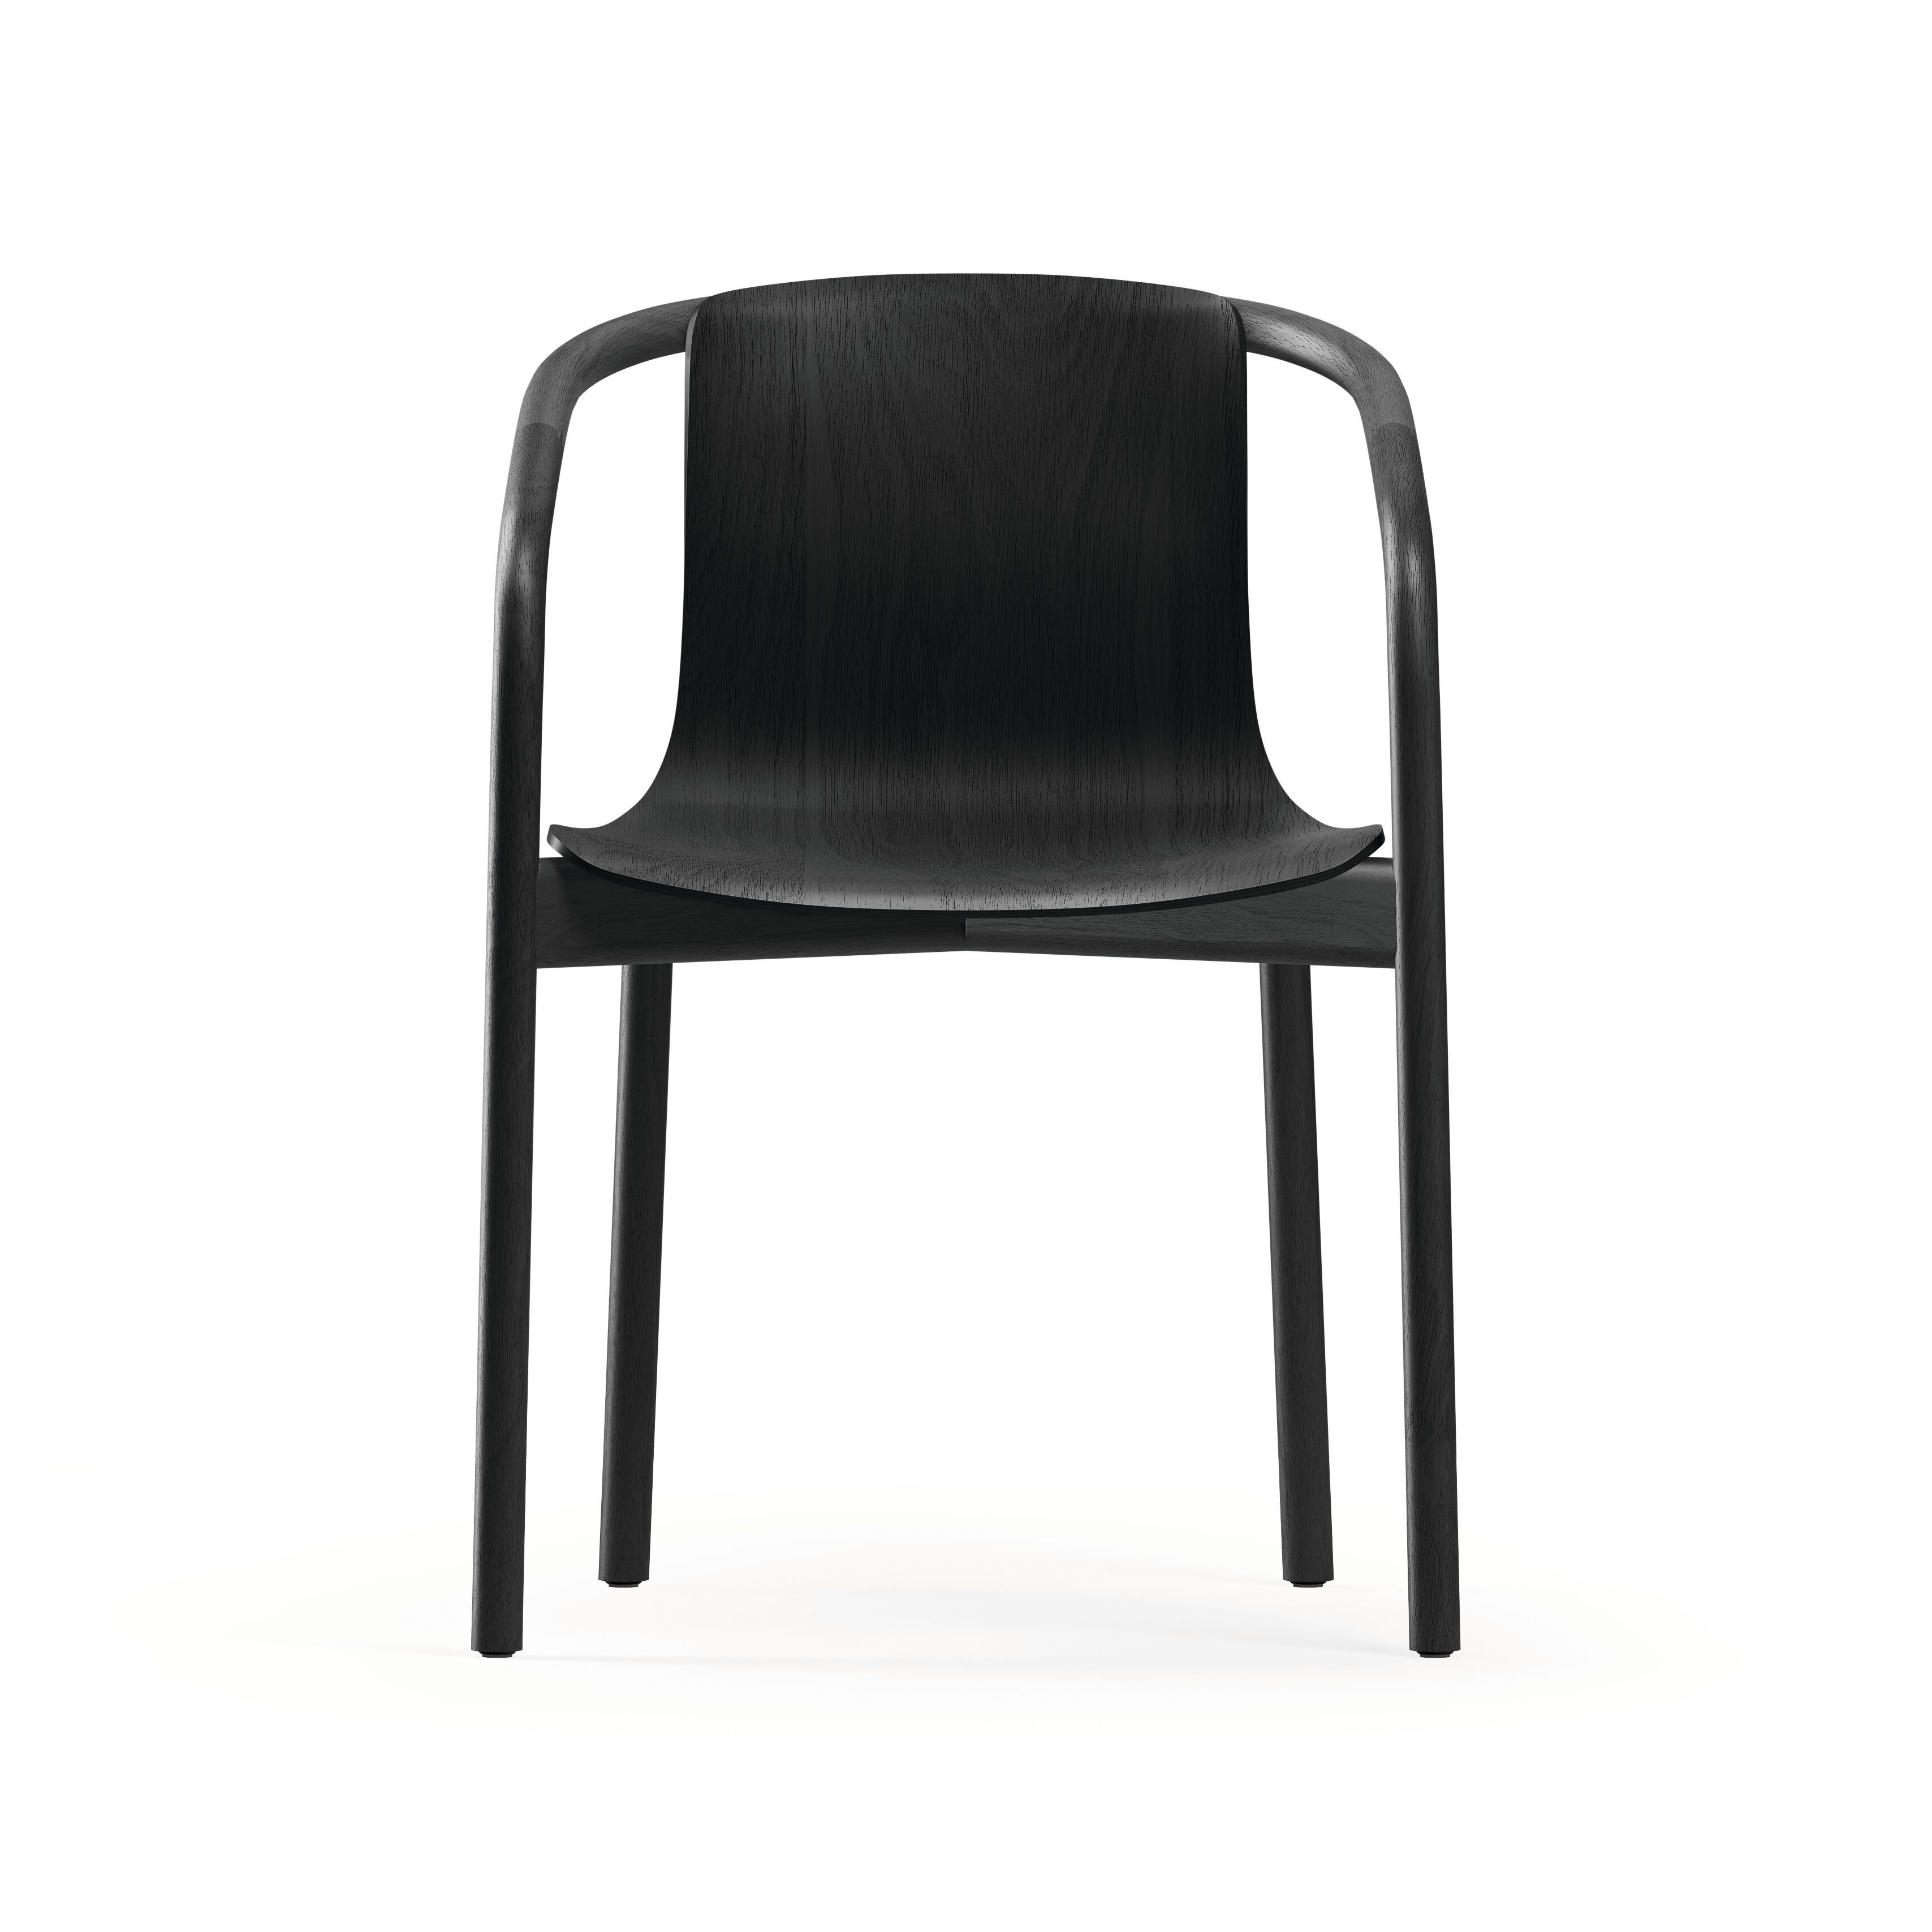 WK-Foster Chair-021.tif